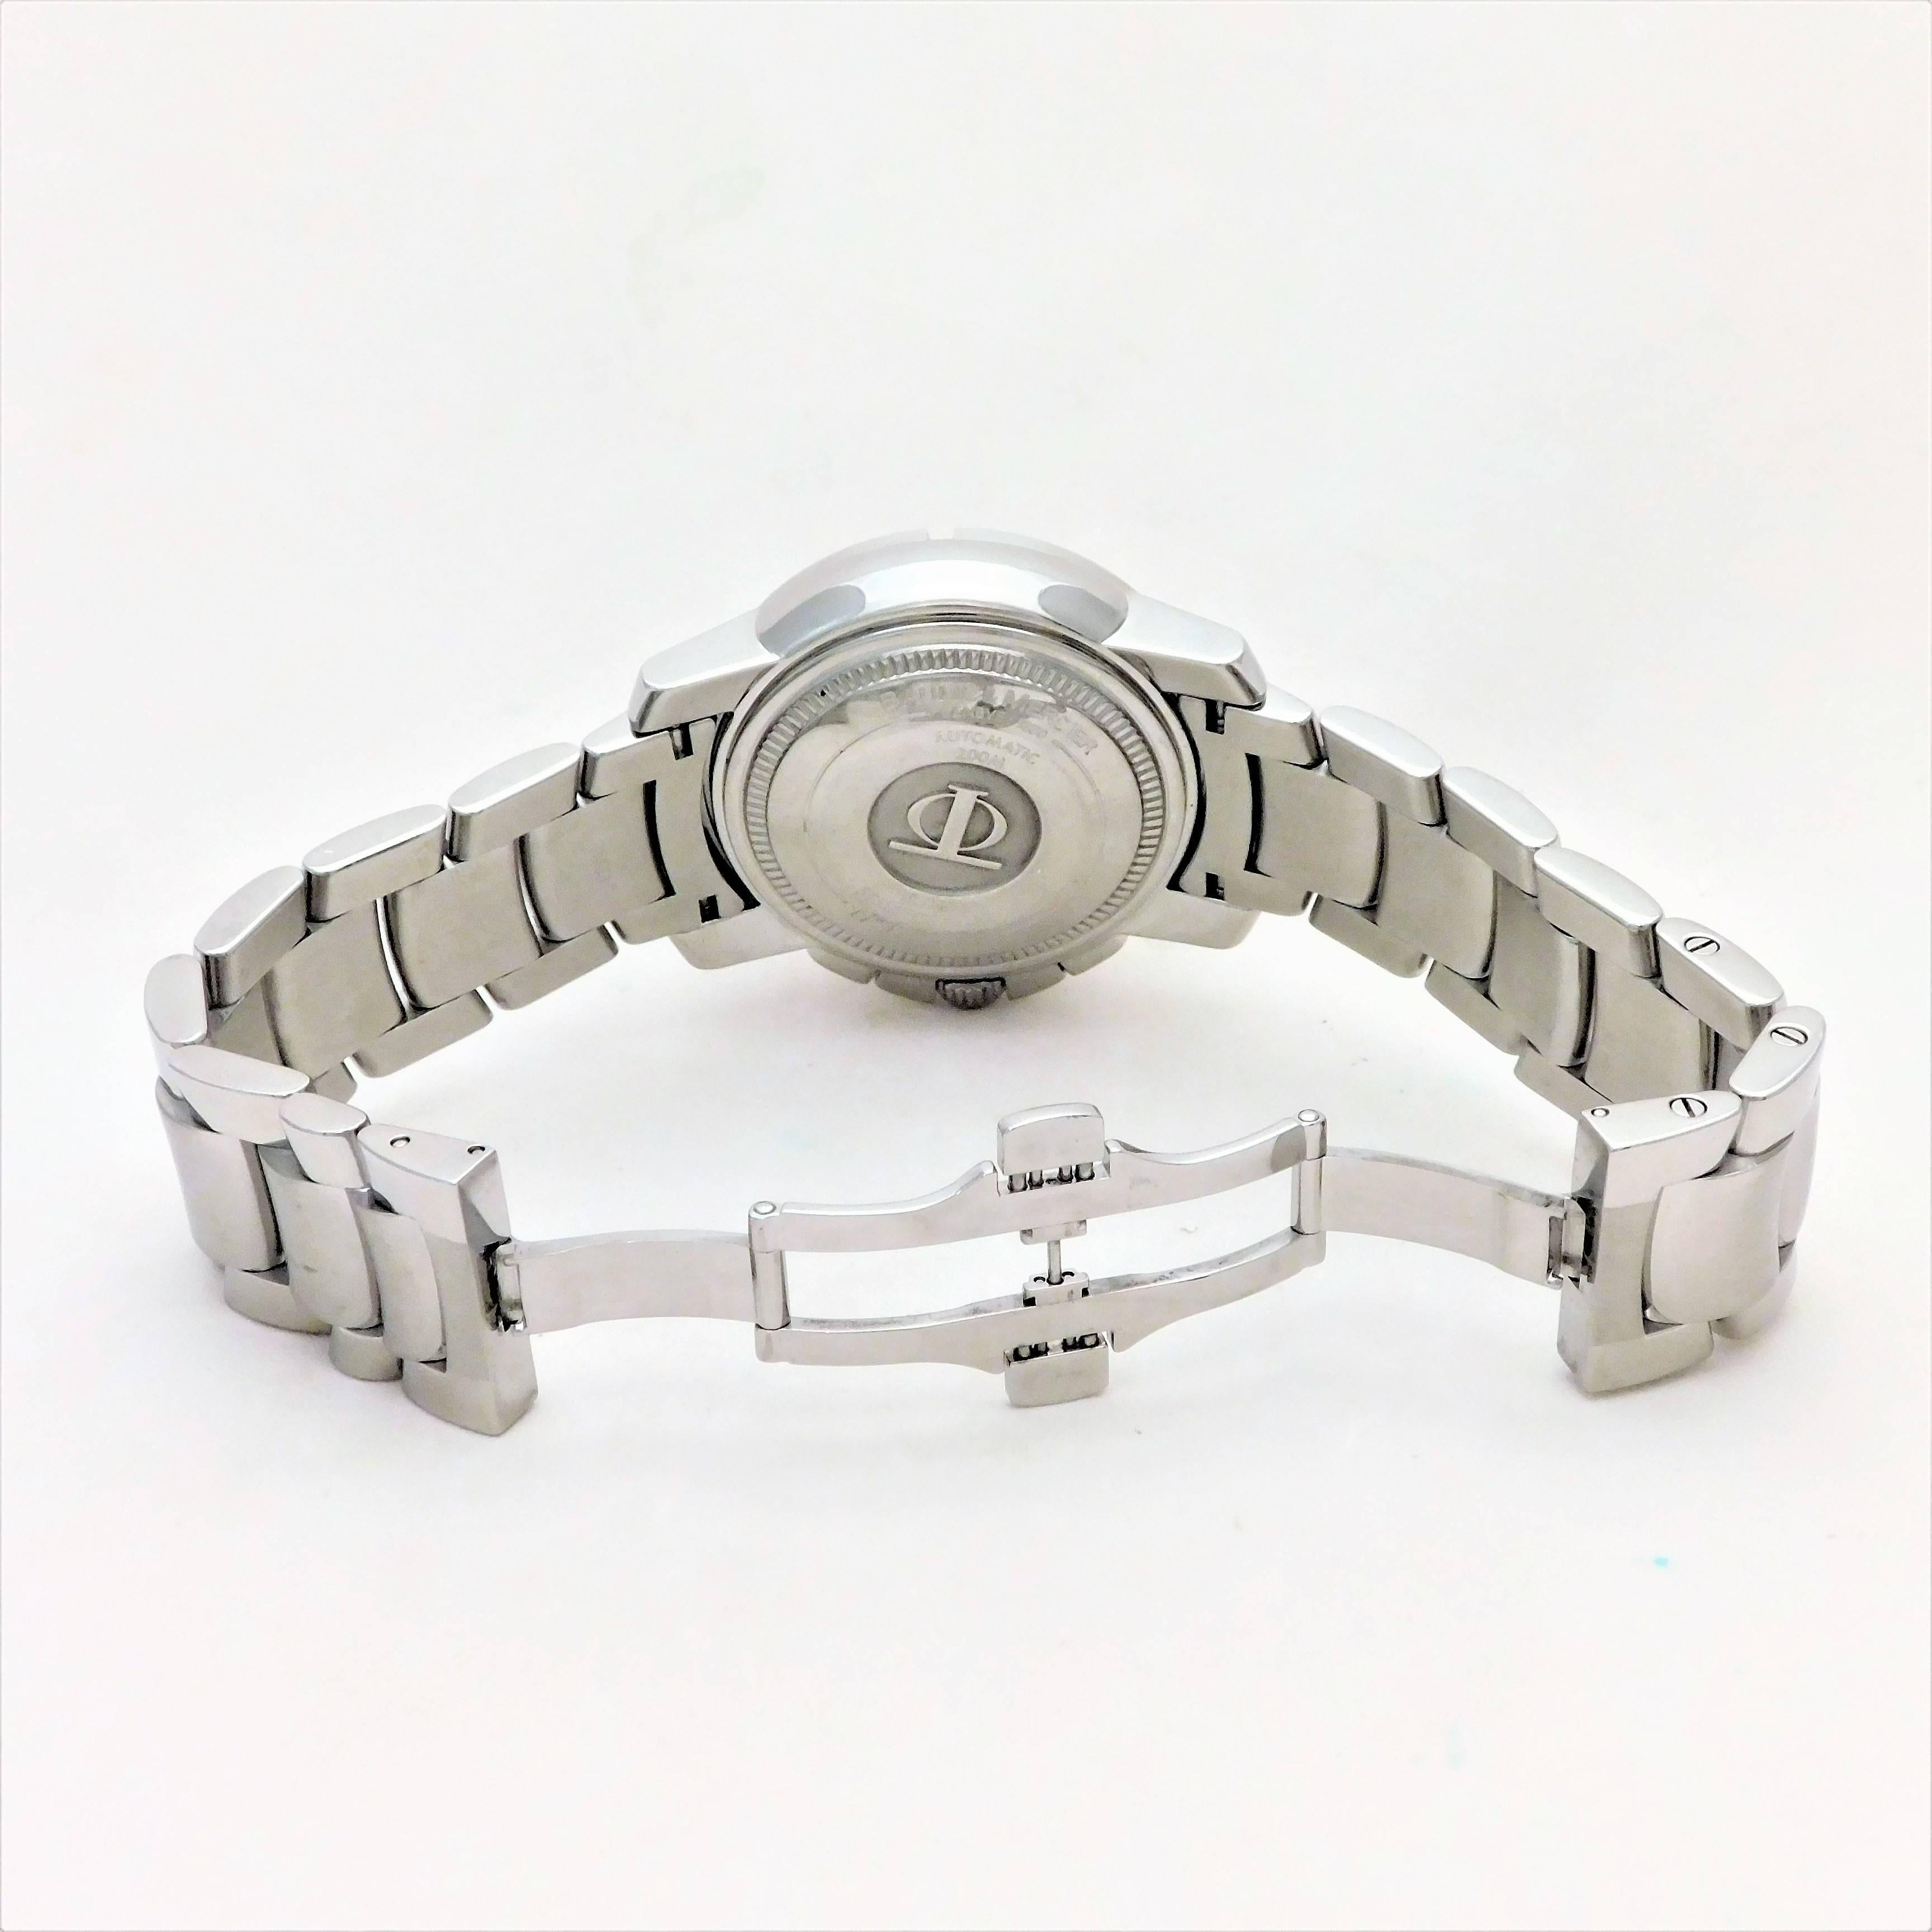 Baume & Mercier Stainless Capeland 65352 Diver Chronograph Automatic Wristwatch 1